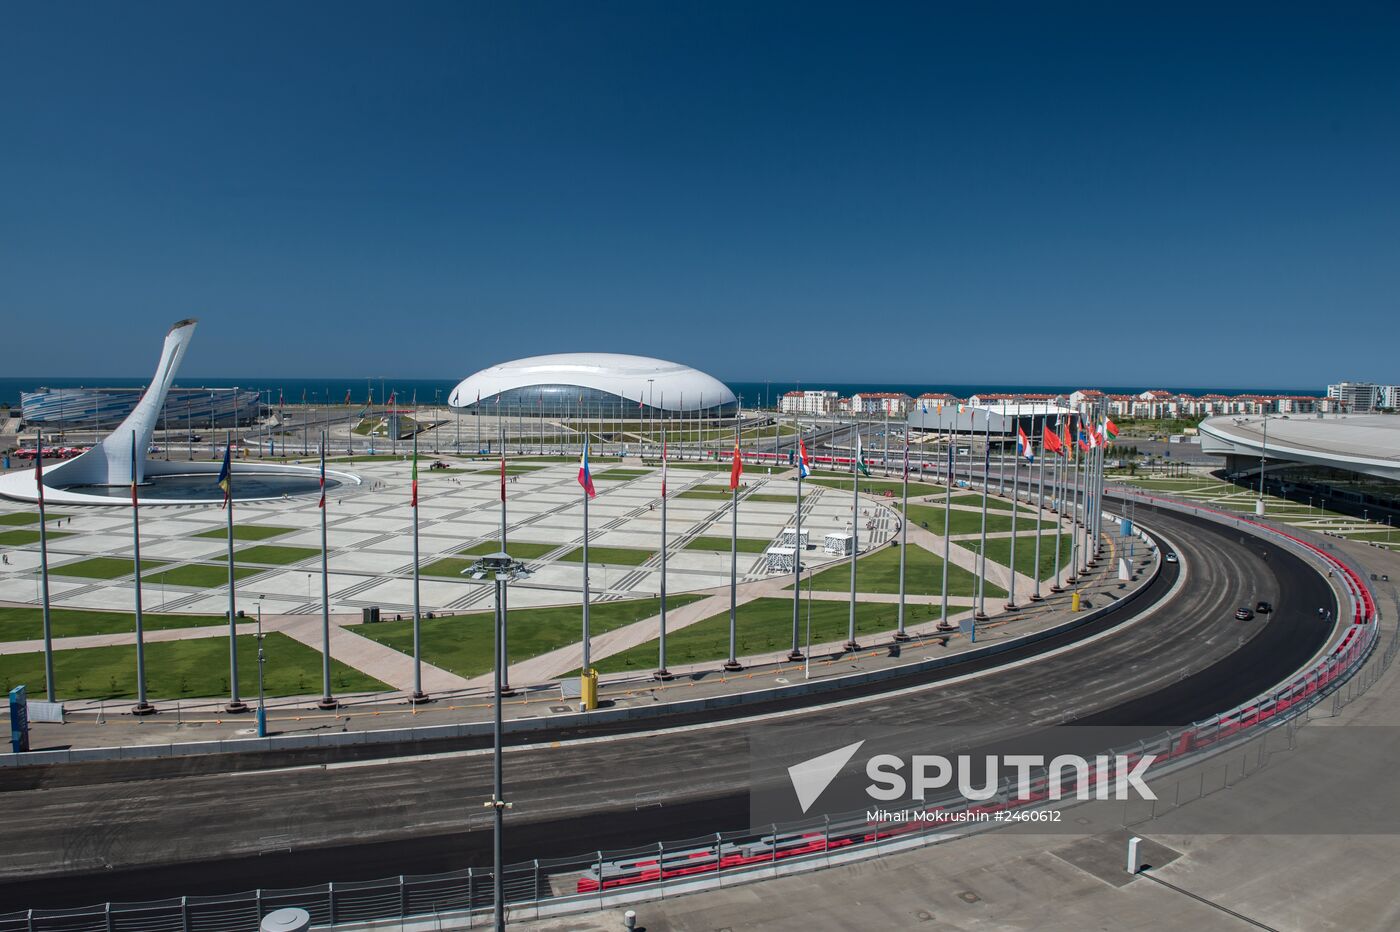 Building the Formula-1 motor racing circuit in Sochi